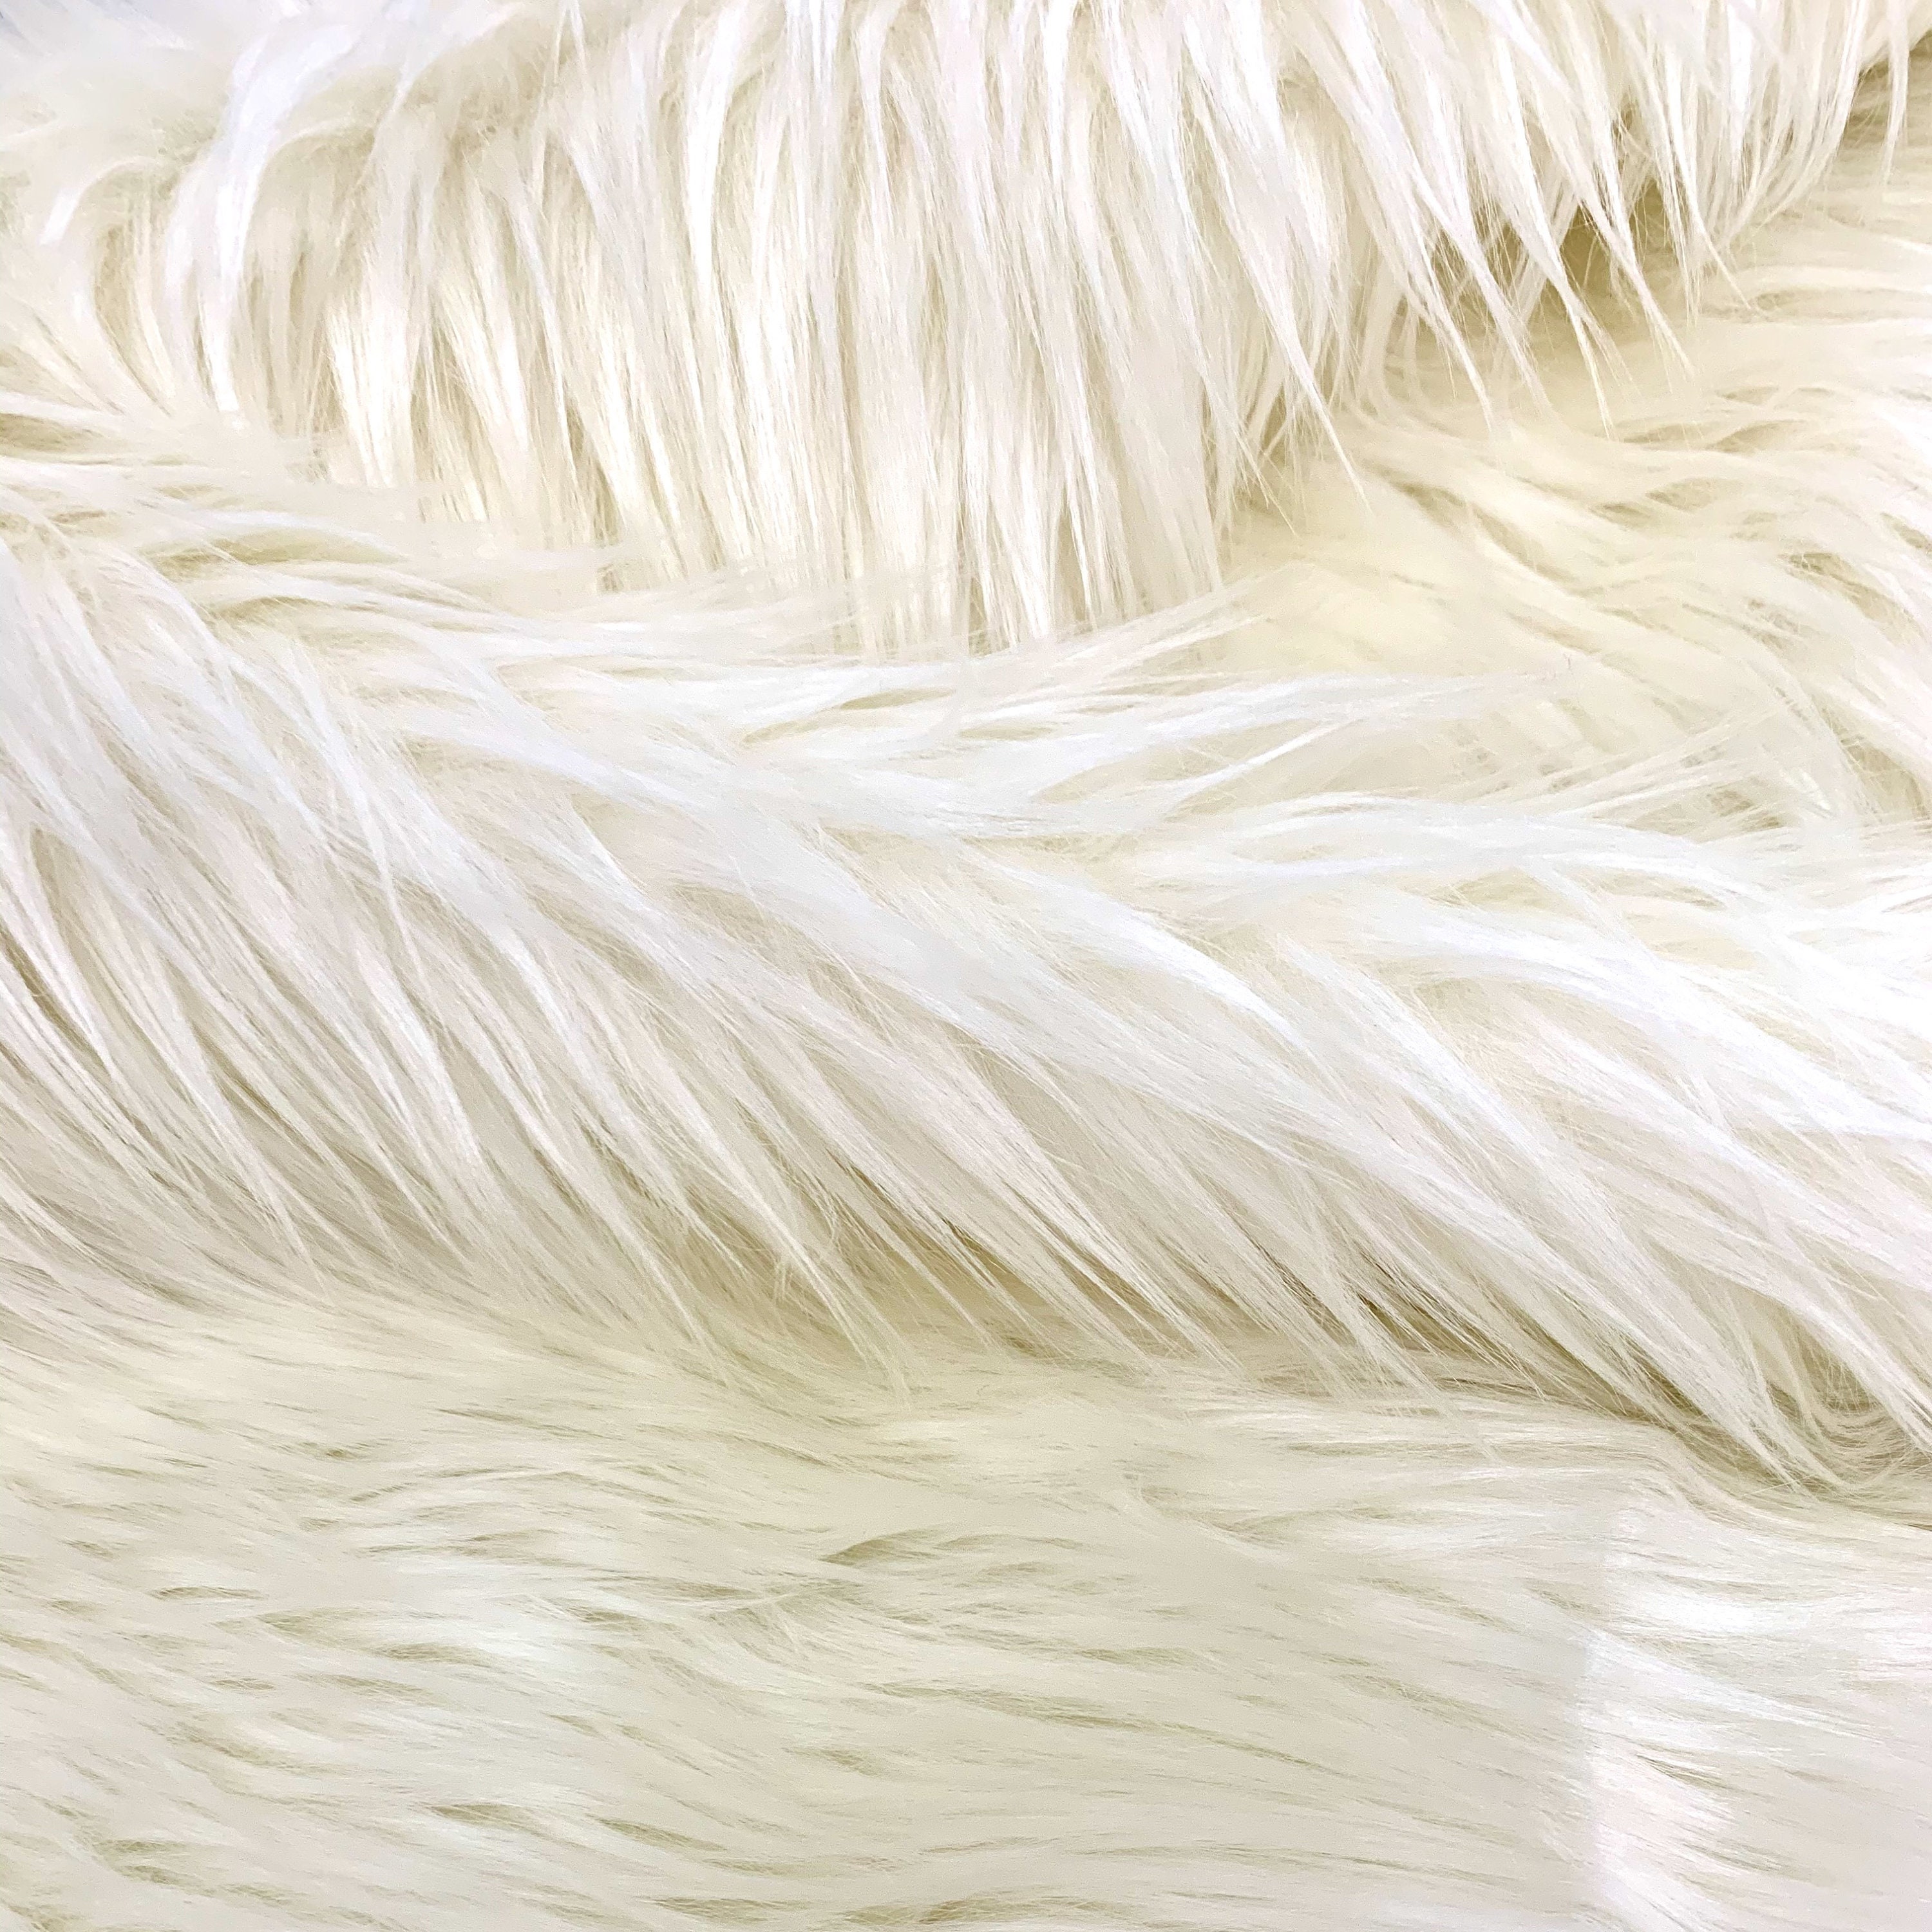 Fake Fur Fabric Offer, Save 70% | jlcatj.gob.mx